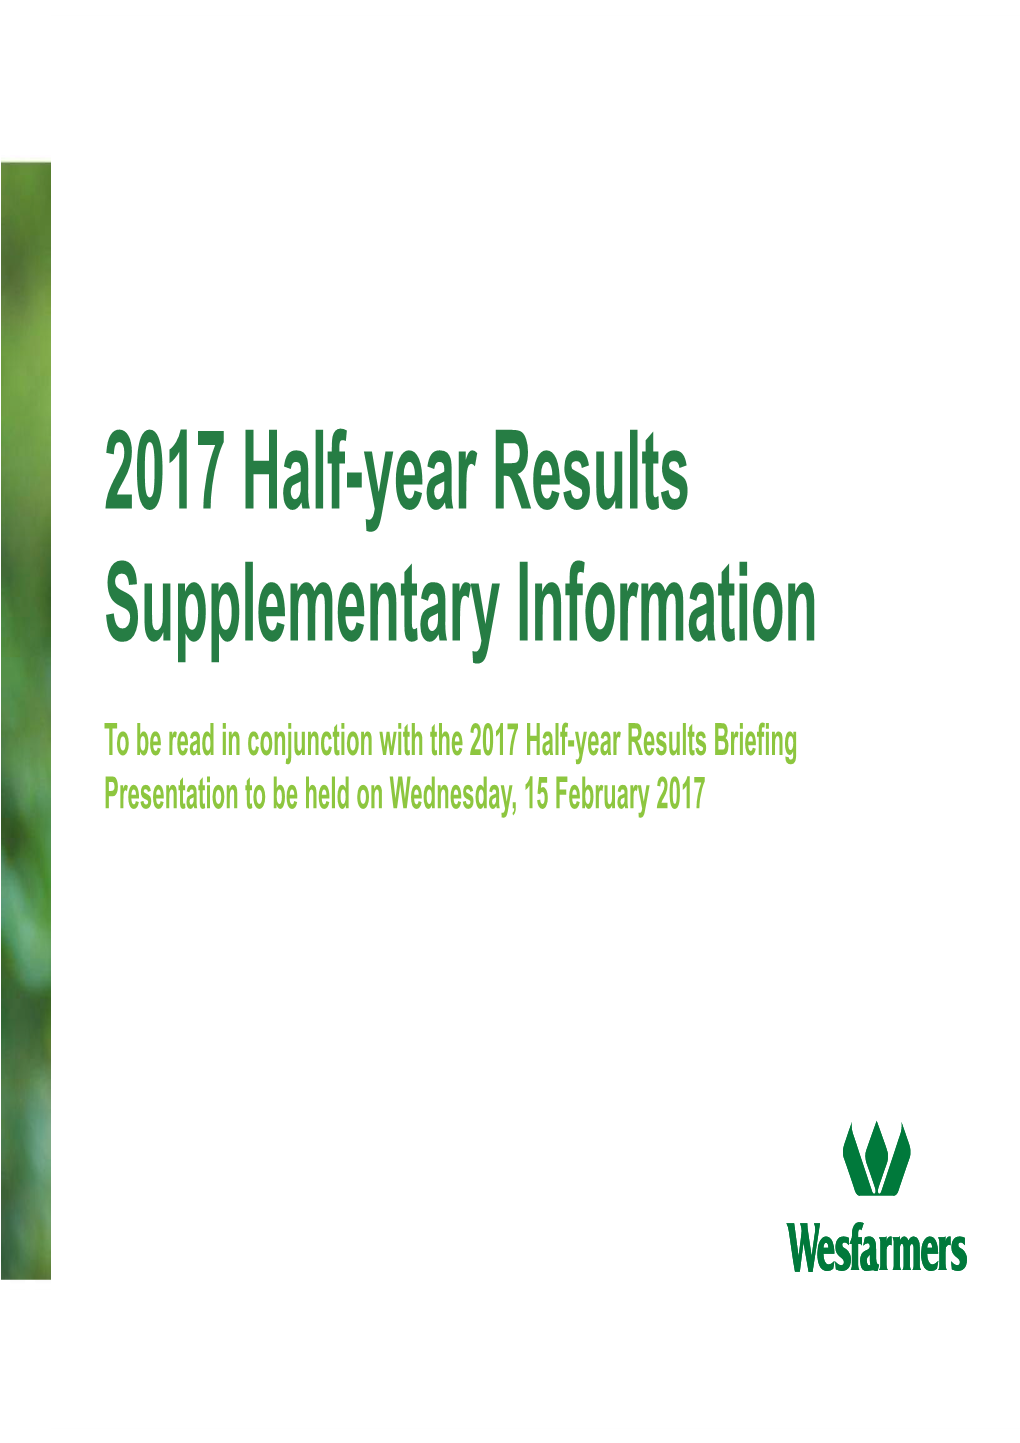 2017 Half-Year Results Supplementary Information 933 KB